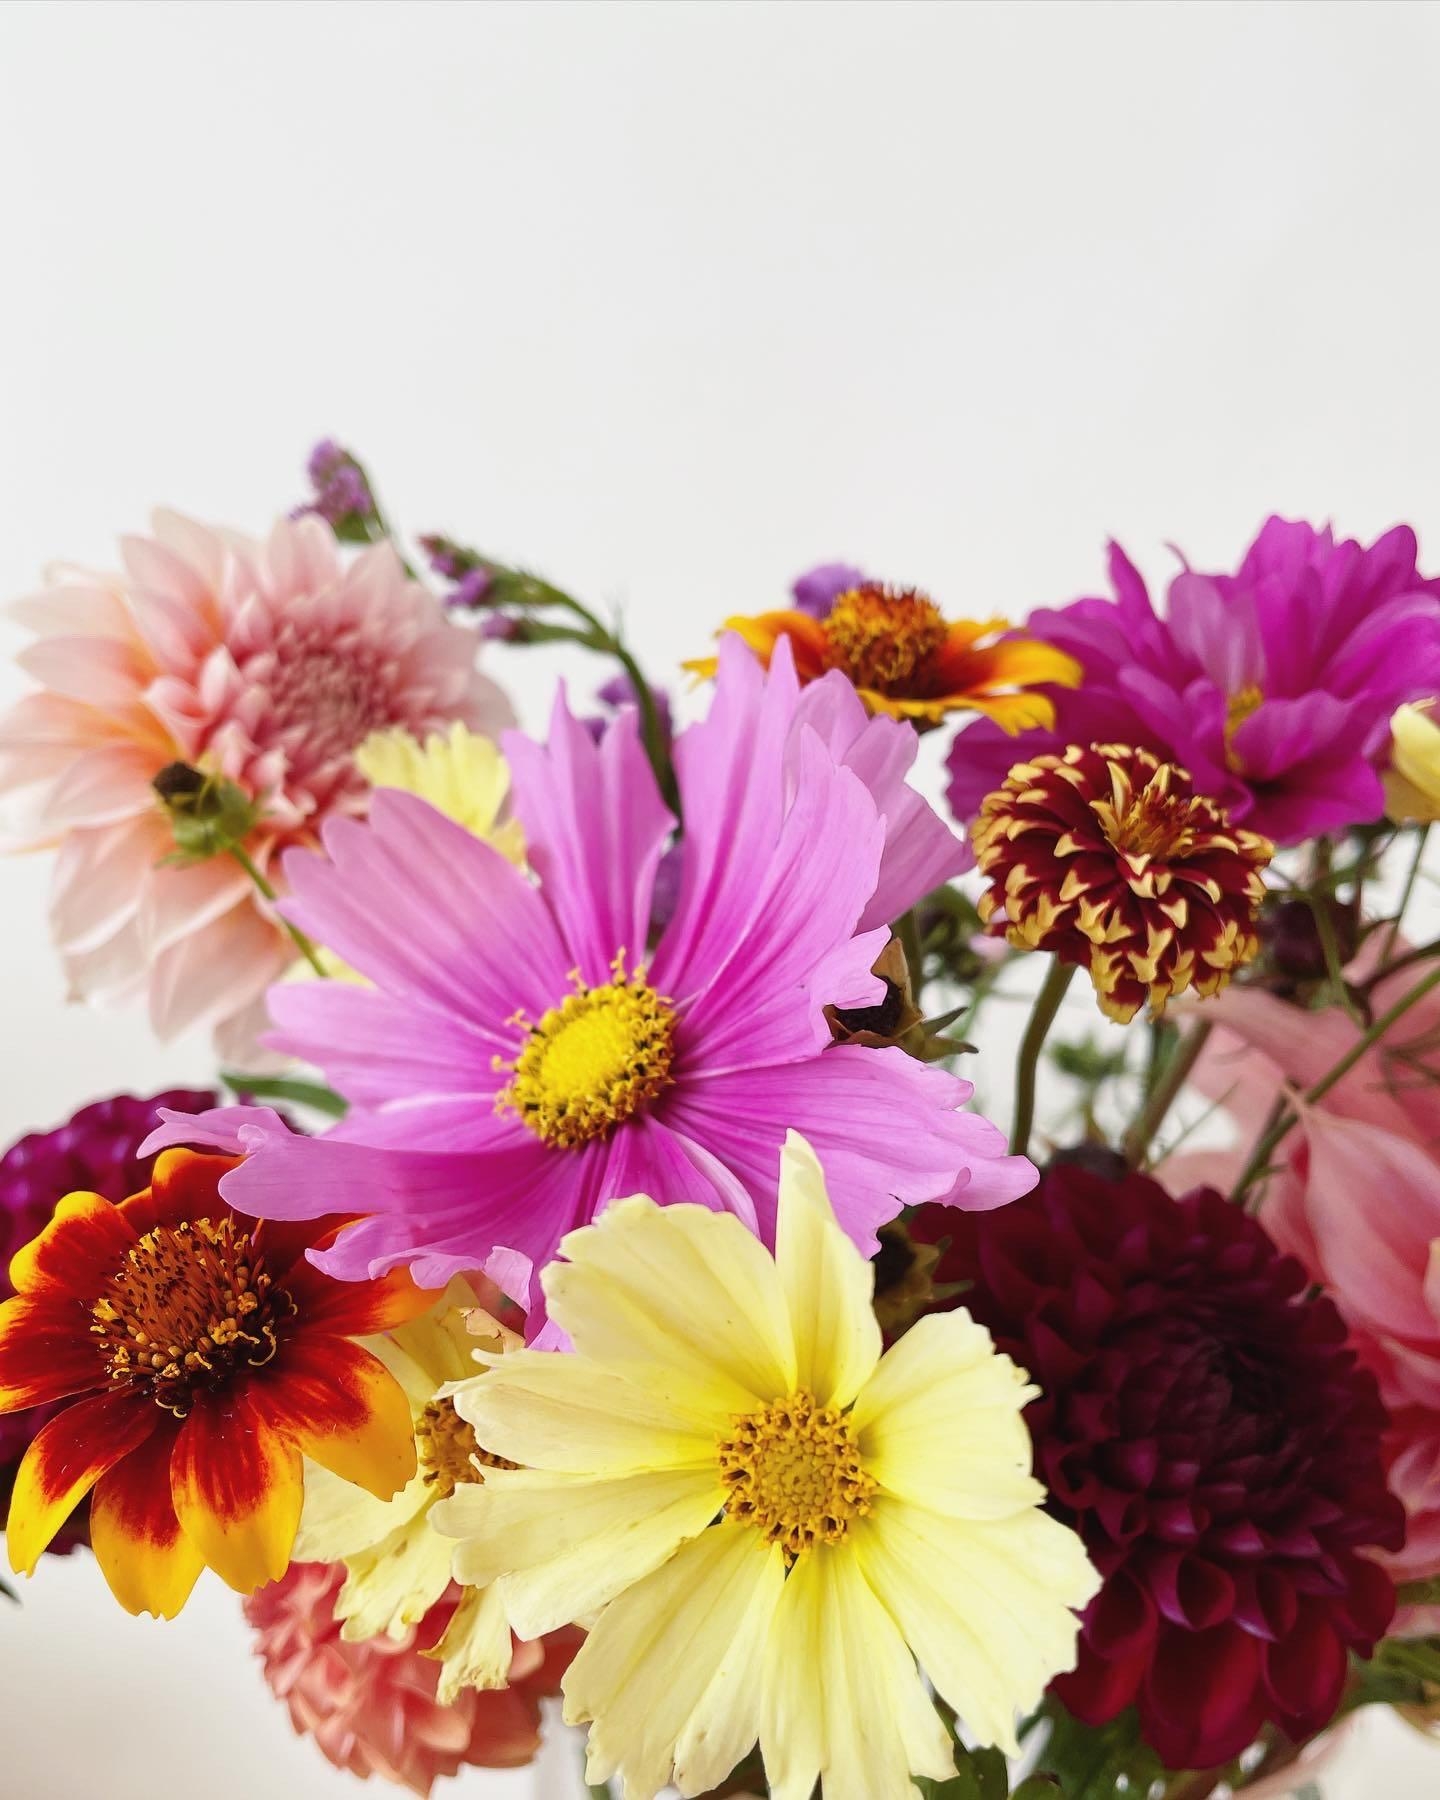 #flowers #freshflowers #slowflowers #decoration #colorful # fallflowers